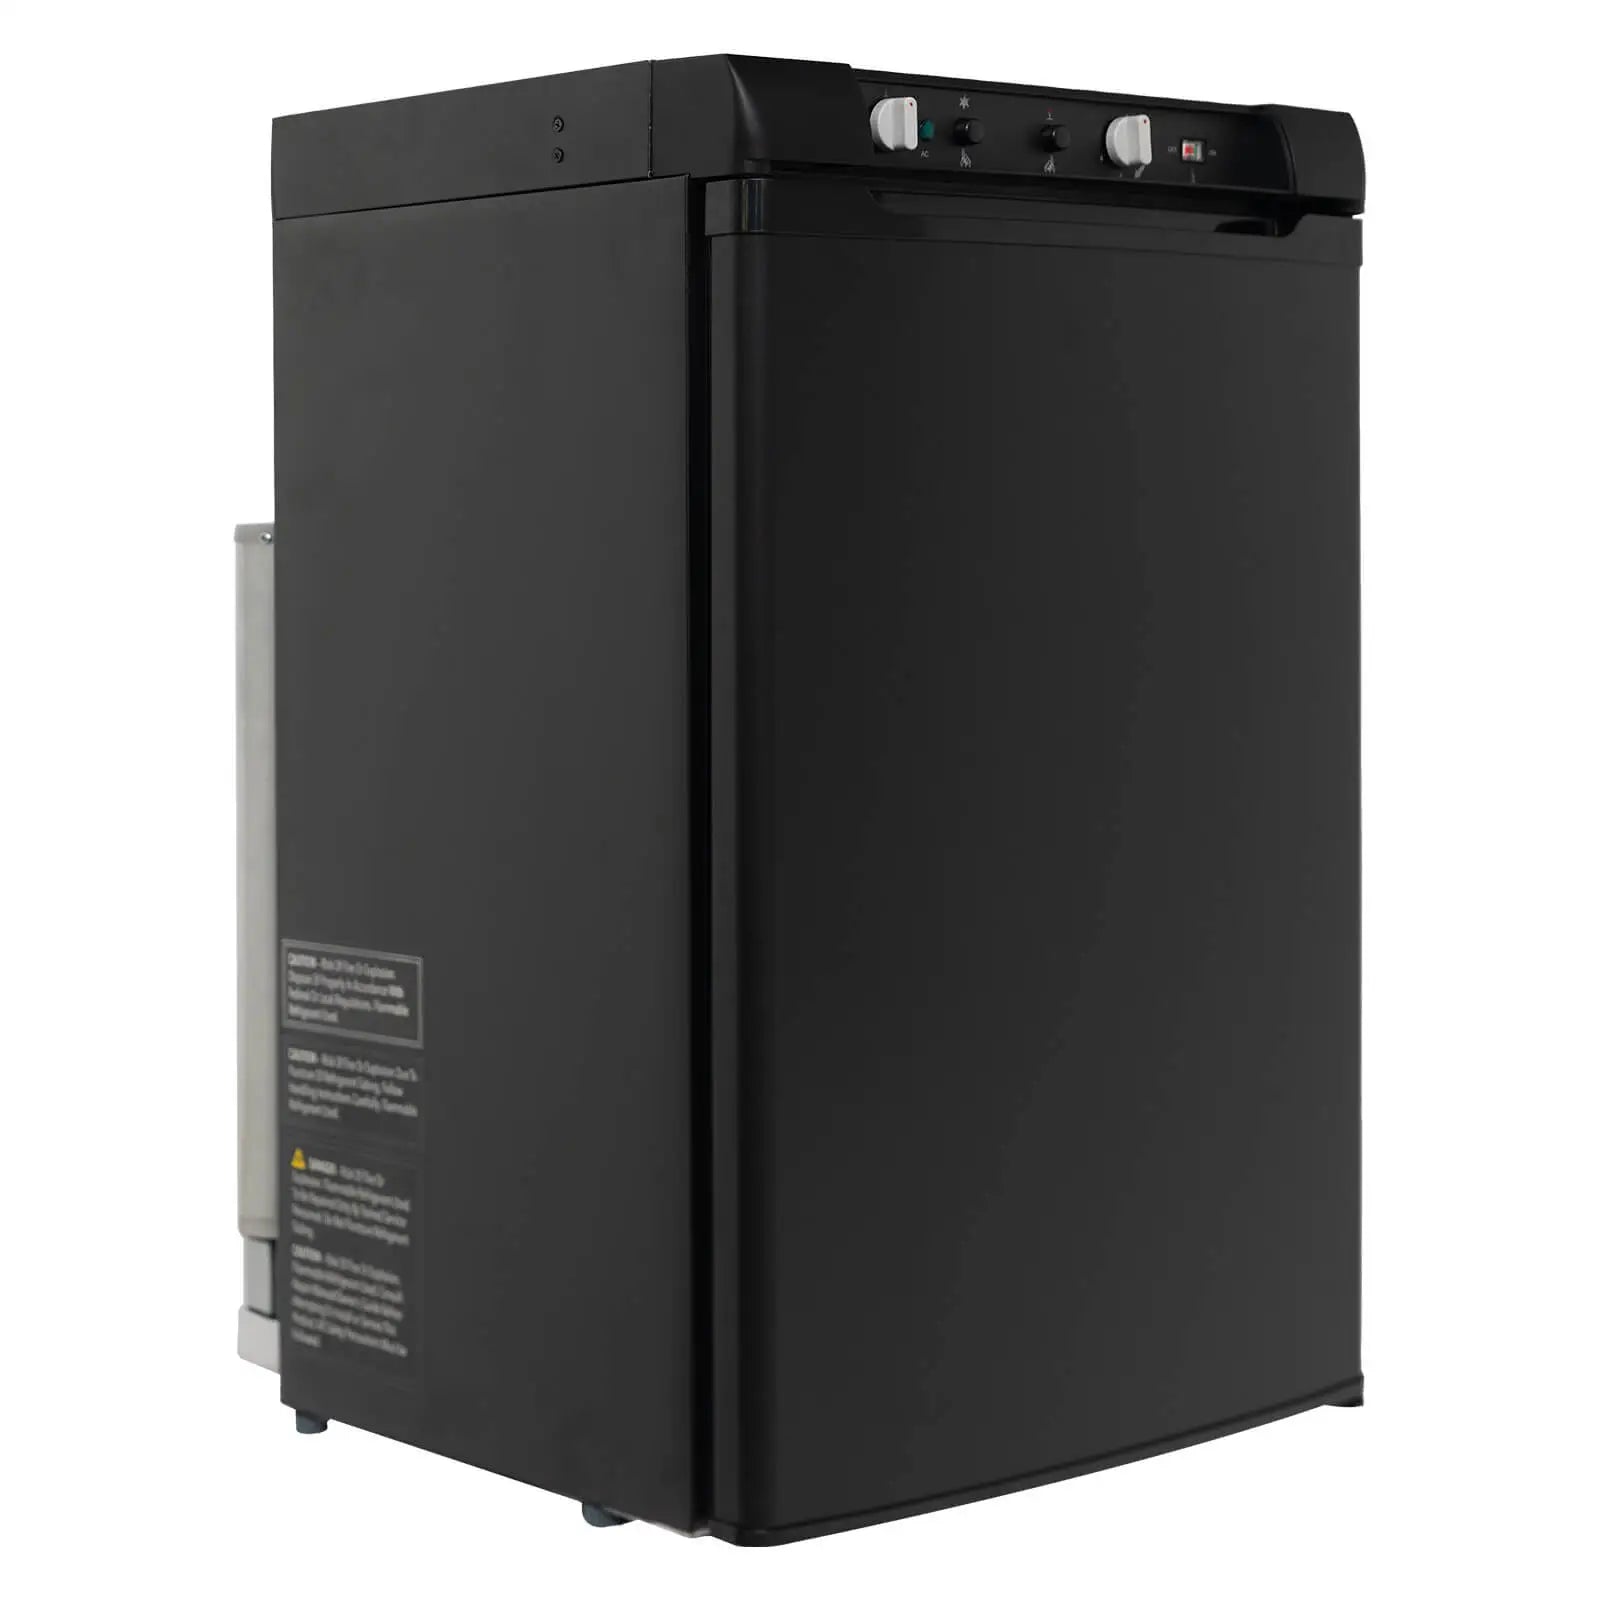  SMETA 3 Way Fridge Propane Refrigerator 12V/110V/Gas 1.4 Cu.Ft  LP Gas Off-Grid Refrigerator without Freezer - Compact RV Cabin Camping  Mini Fridge, Black : Automotive